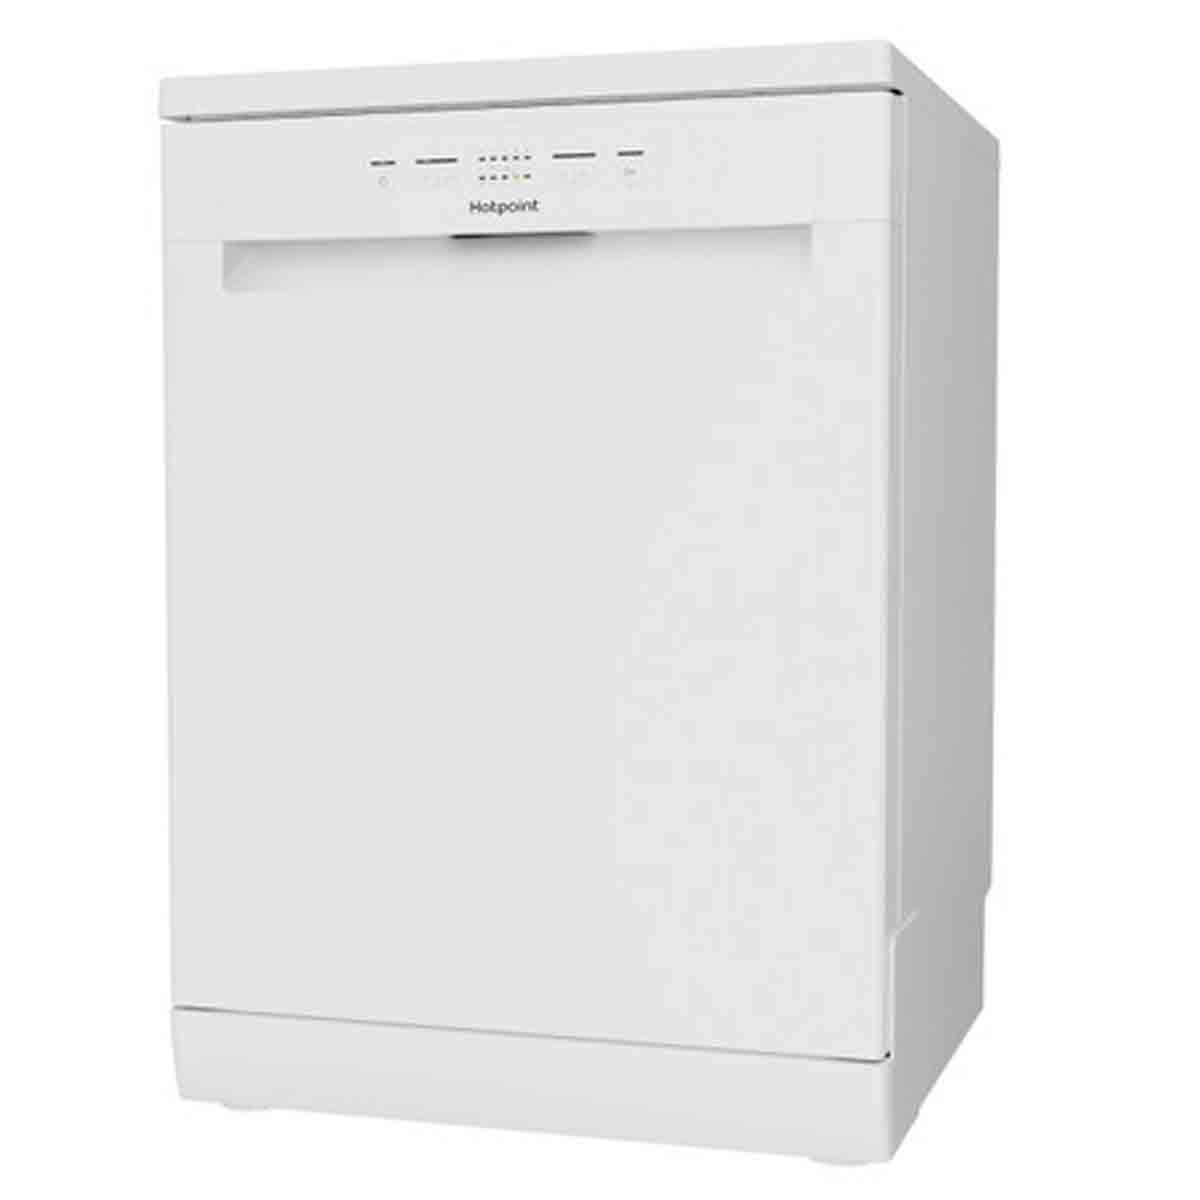 Hotpoint HFC 2B19 UK N Dishwasher - White